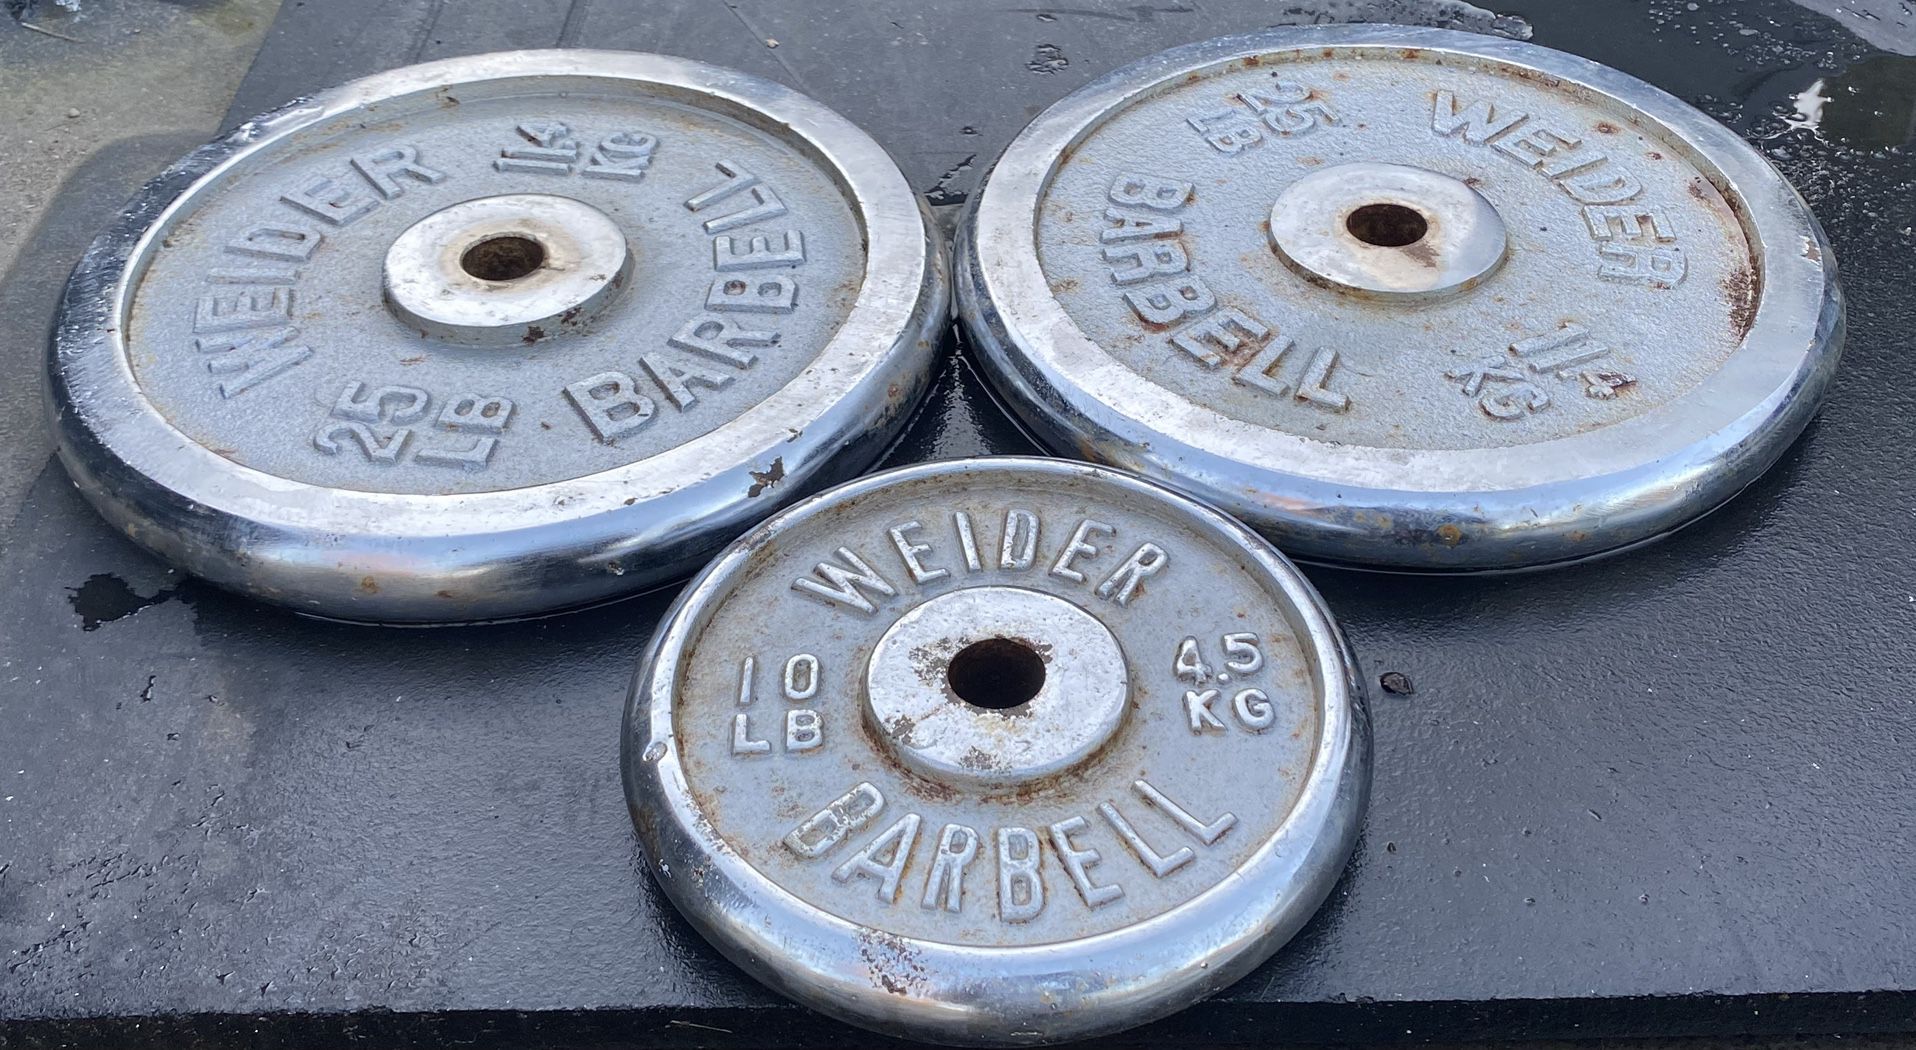 2-25 Lb & 1-10lb Chrome Weider Barbell Plates 